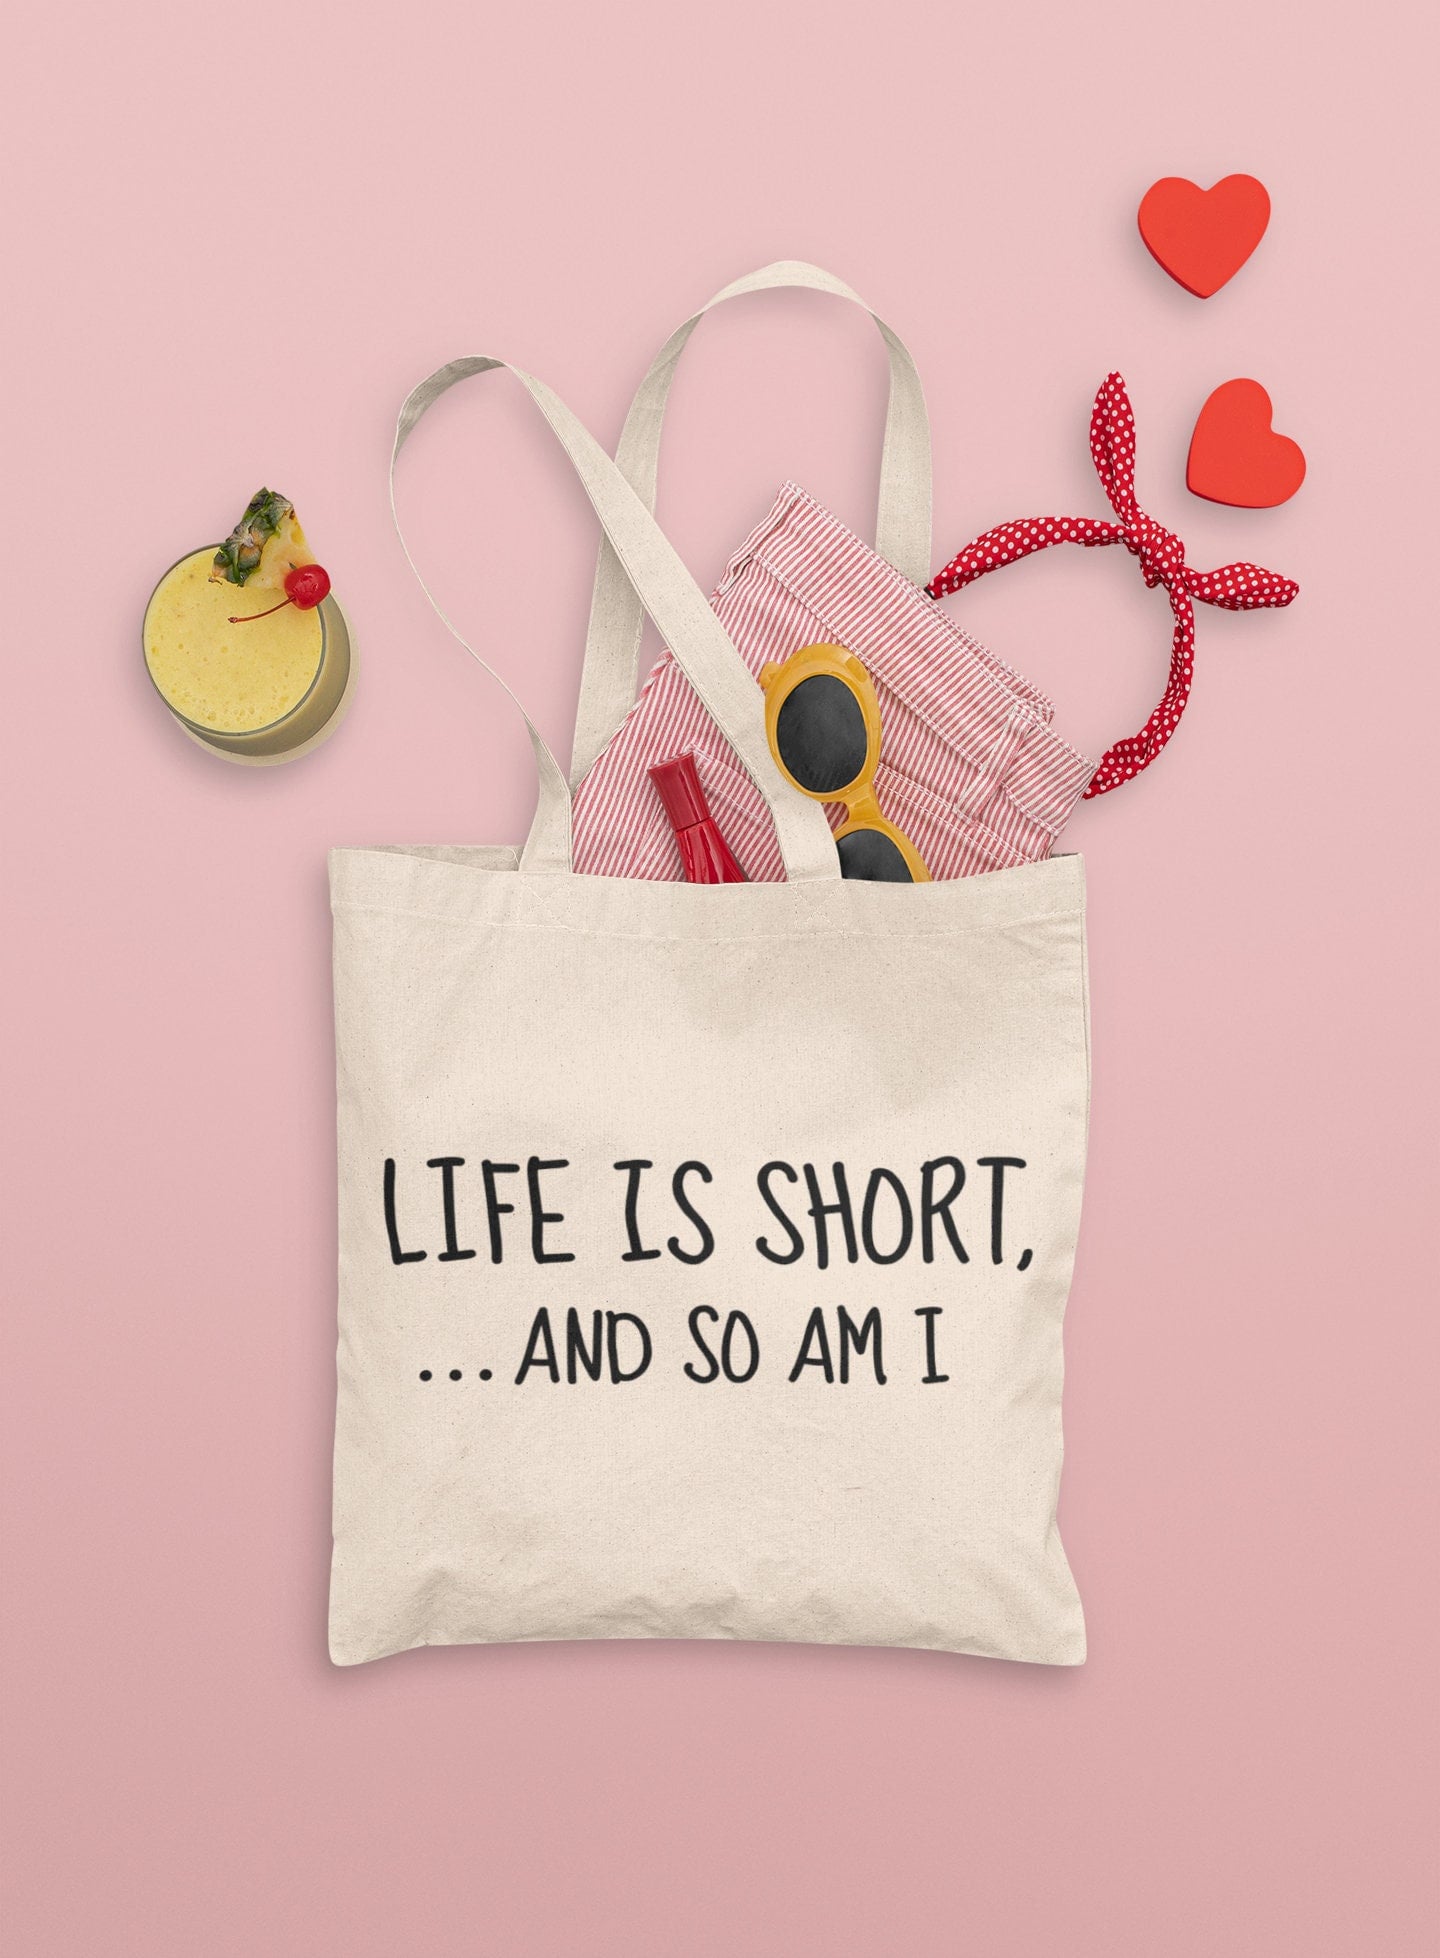 Make a Reusable Snack Bag - My Happy Crazy Life